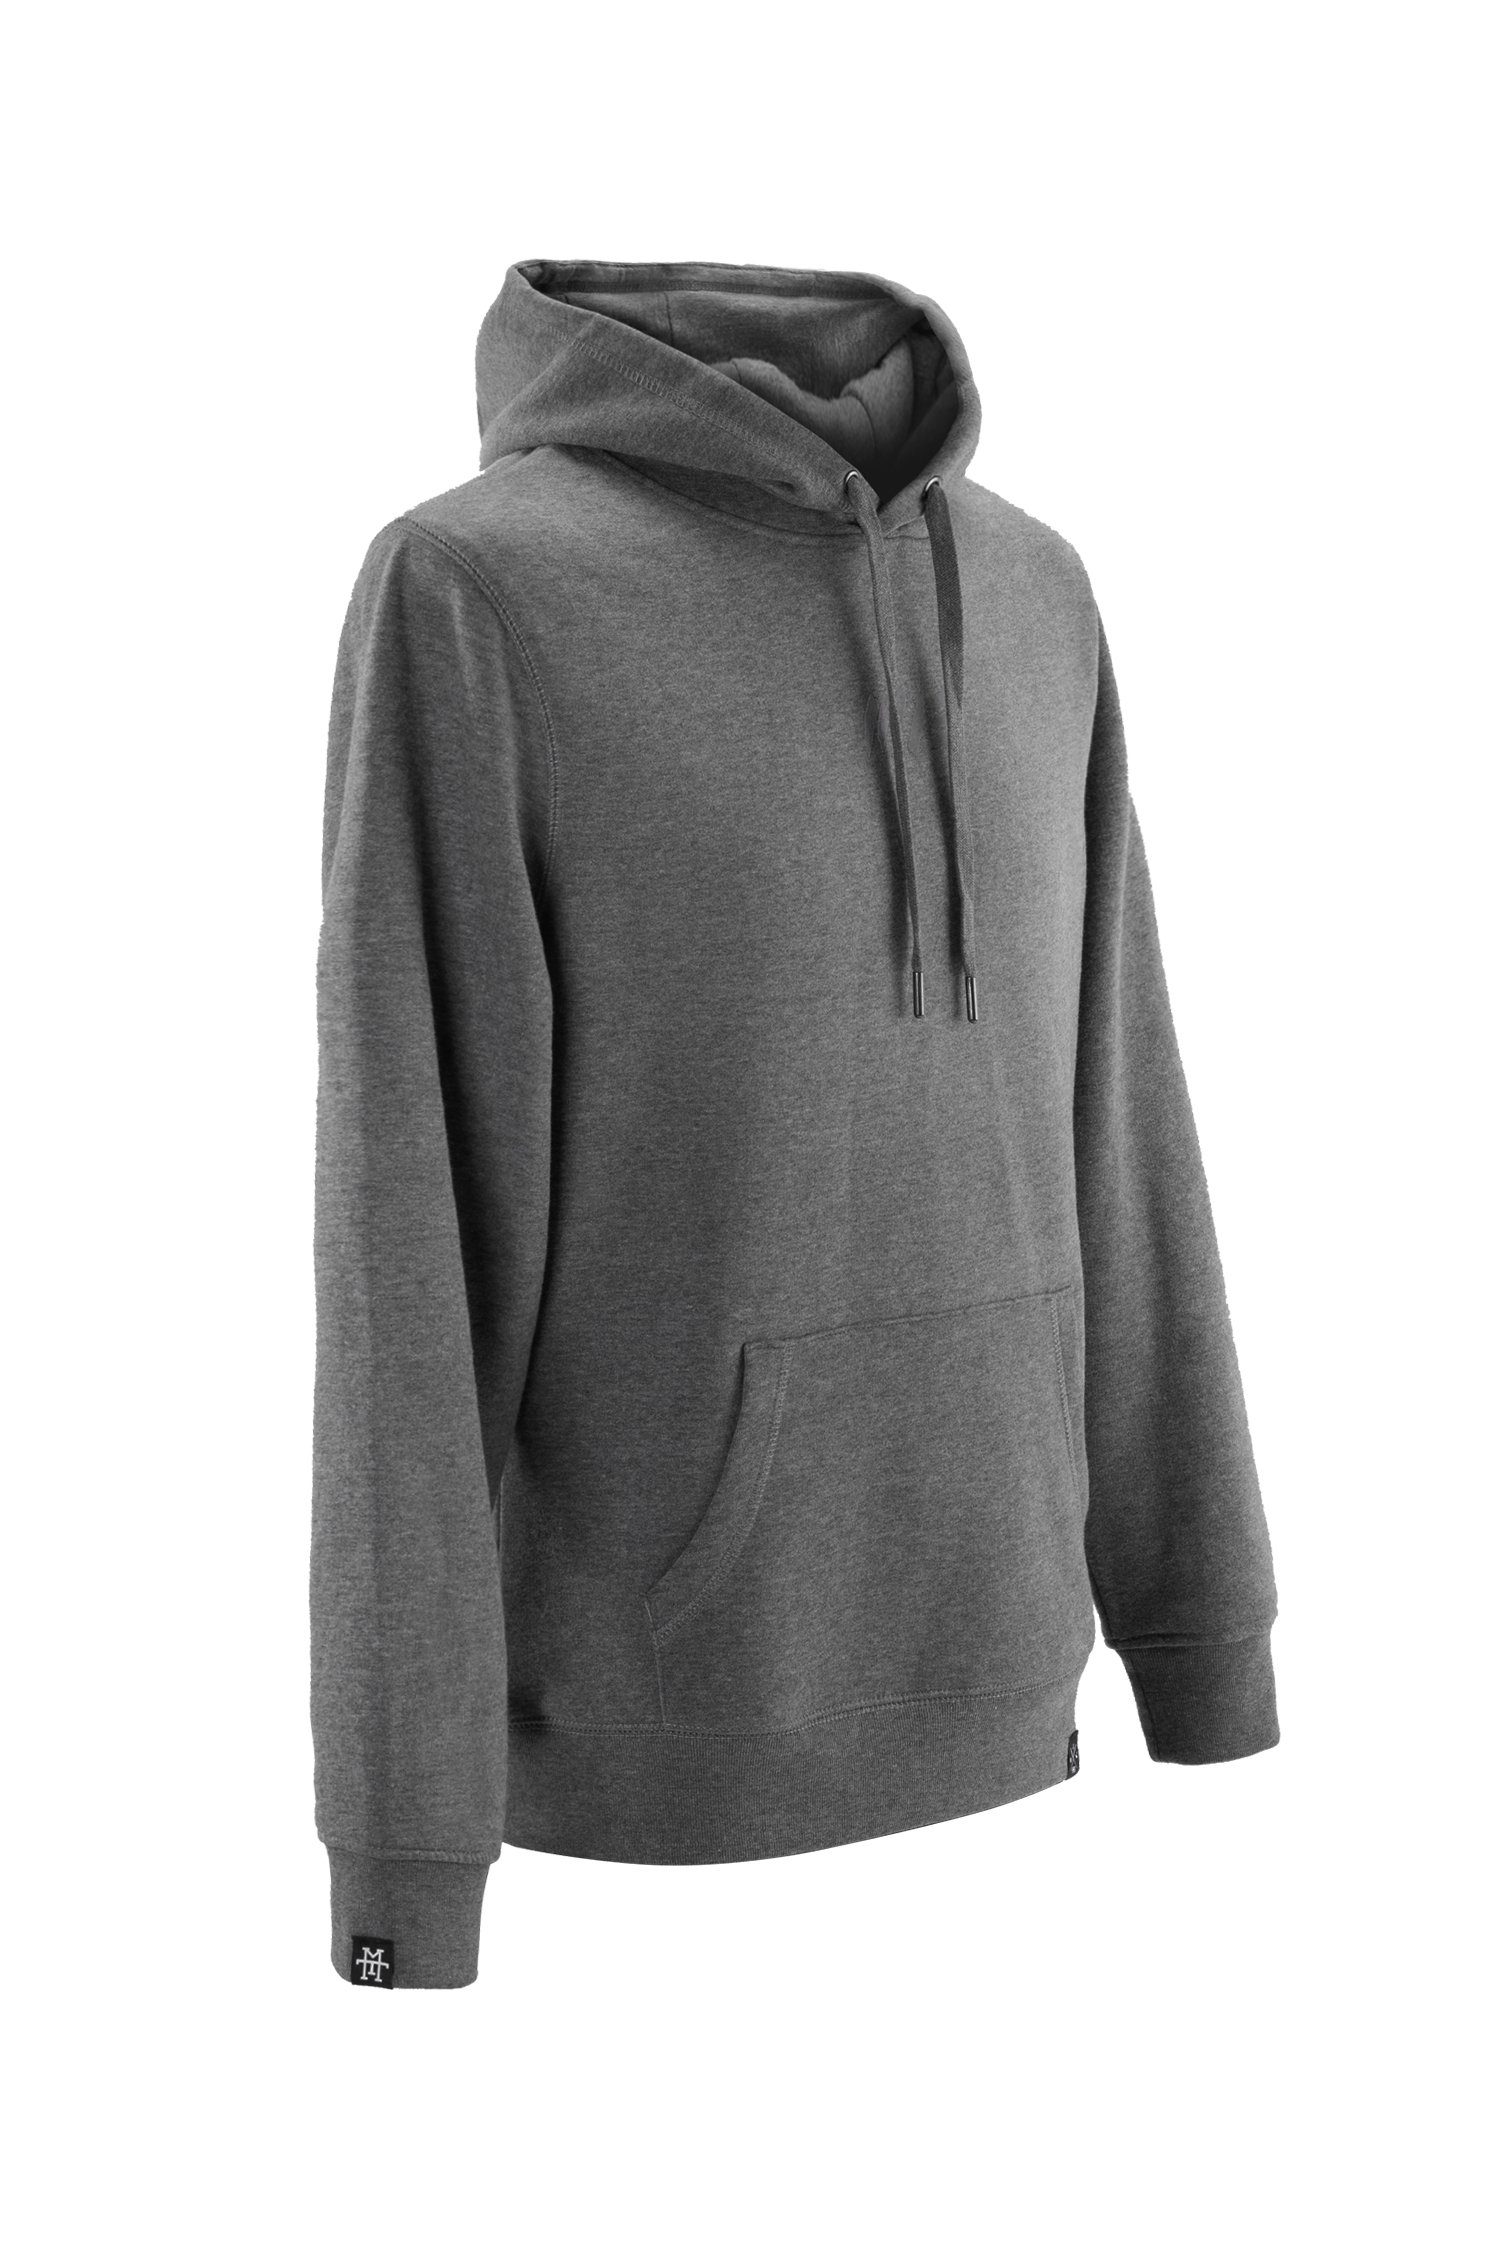 Hoodie M13 - Bully Hooded Manufaktur13 Asphalt mit Metallkordeln Kapuzenpullover Sweater